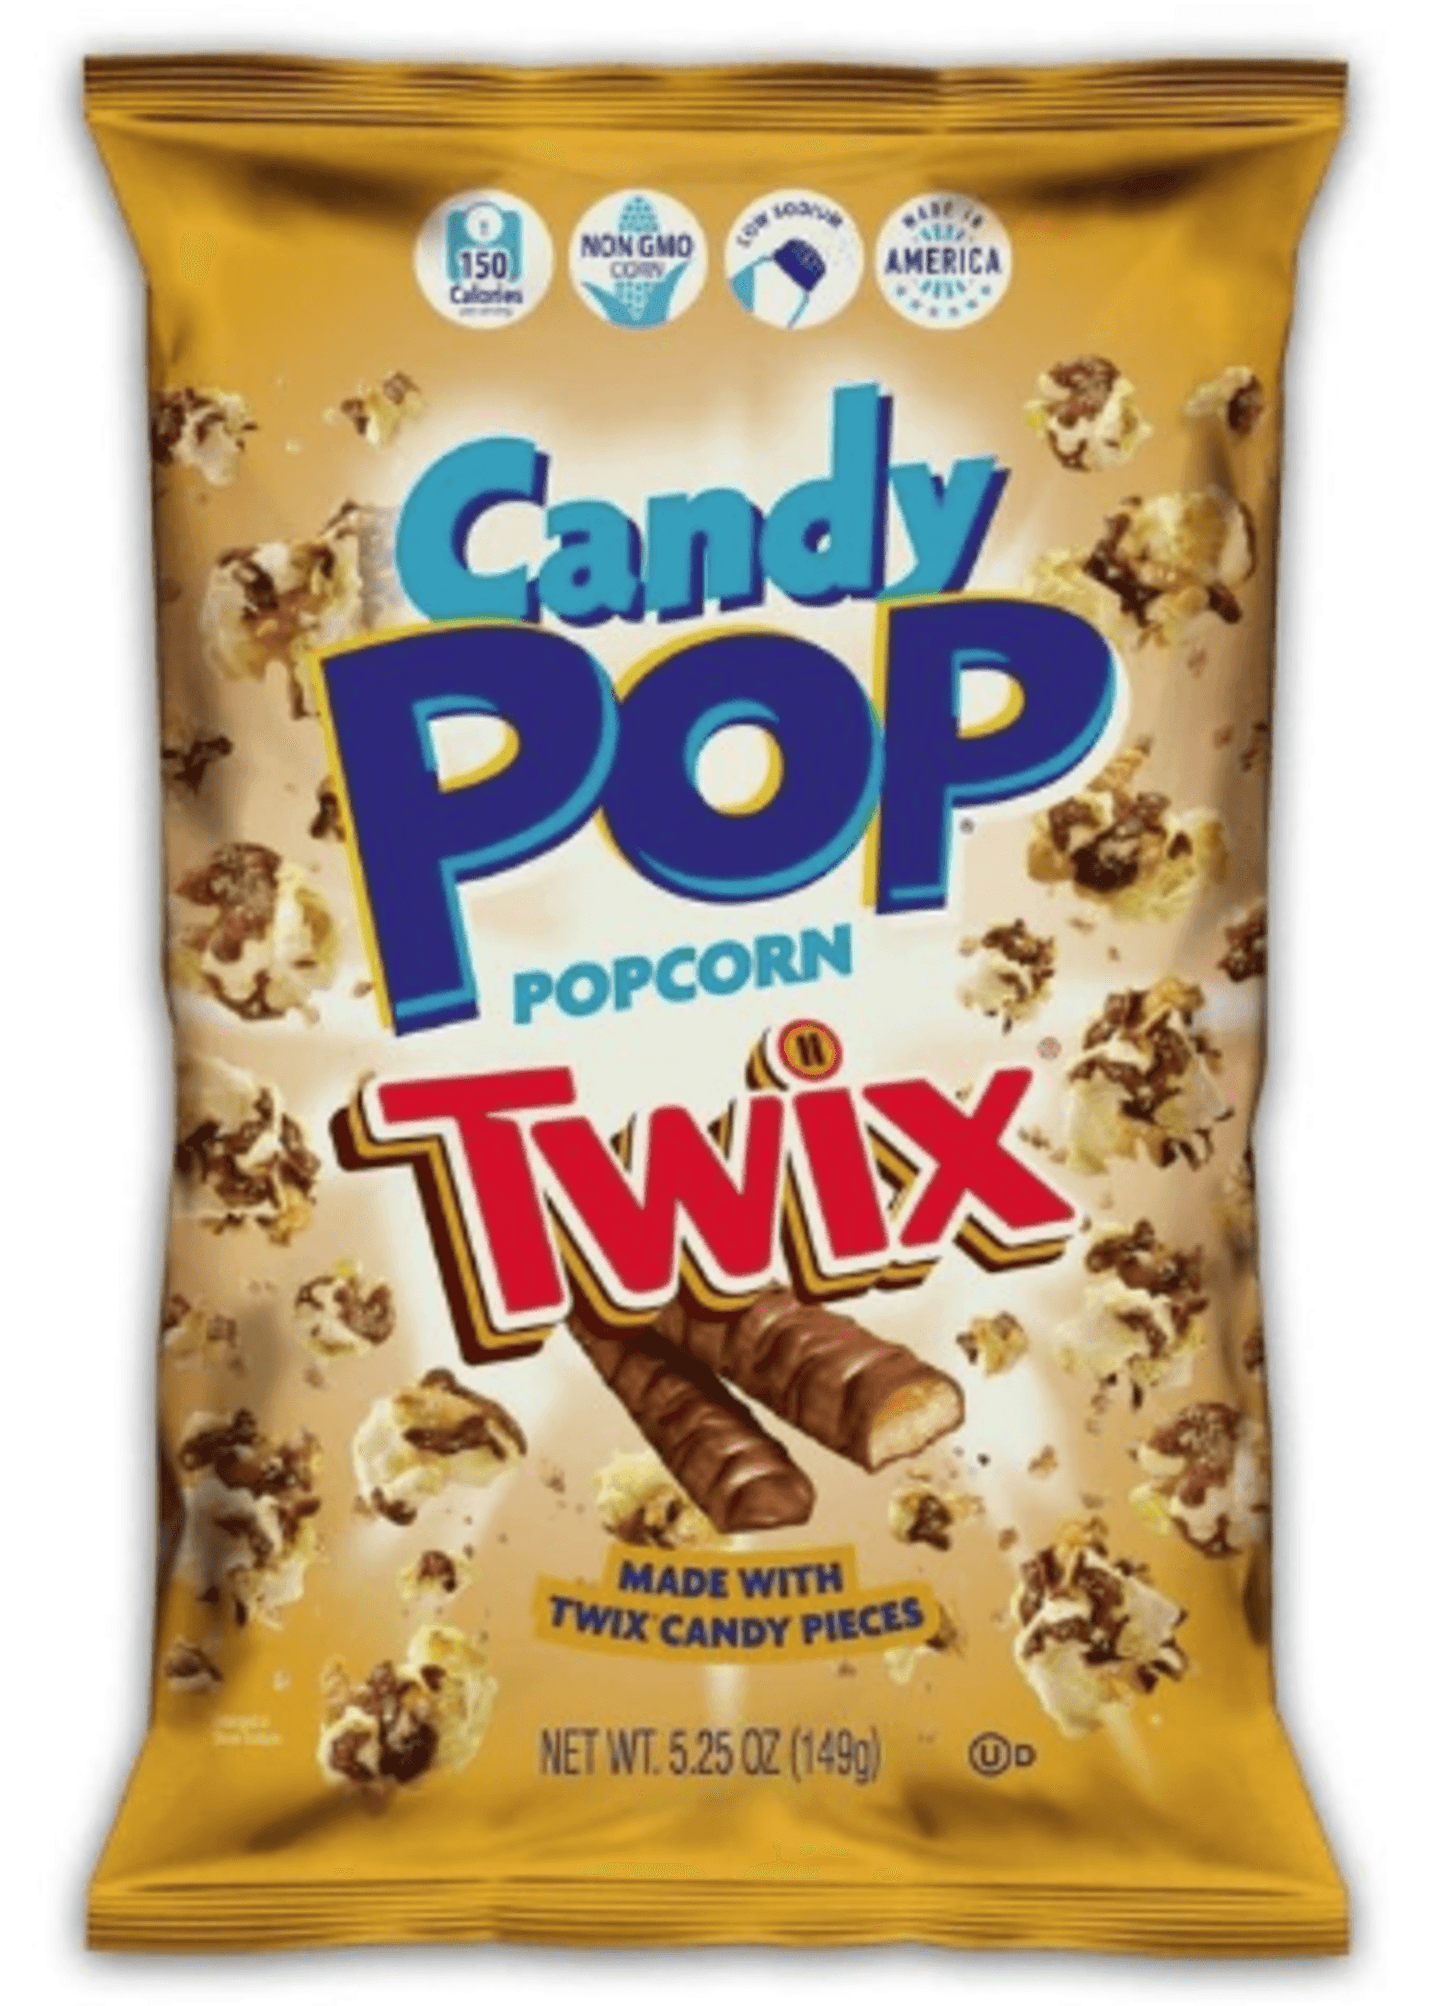 Candy Pop Twix Chocolate Popcorn (149g)